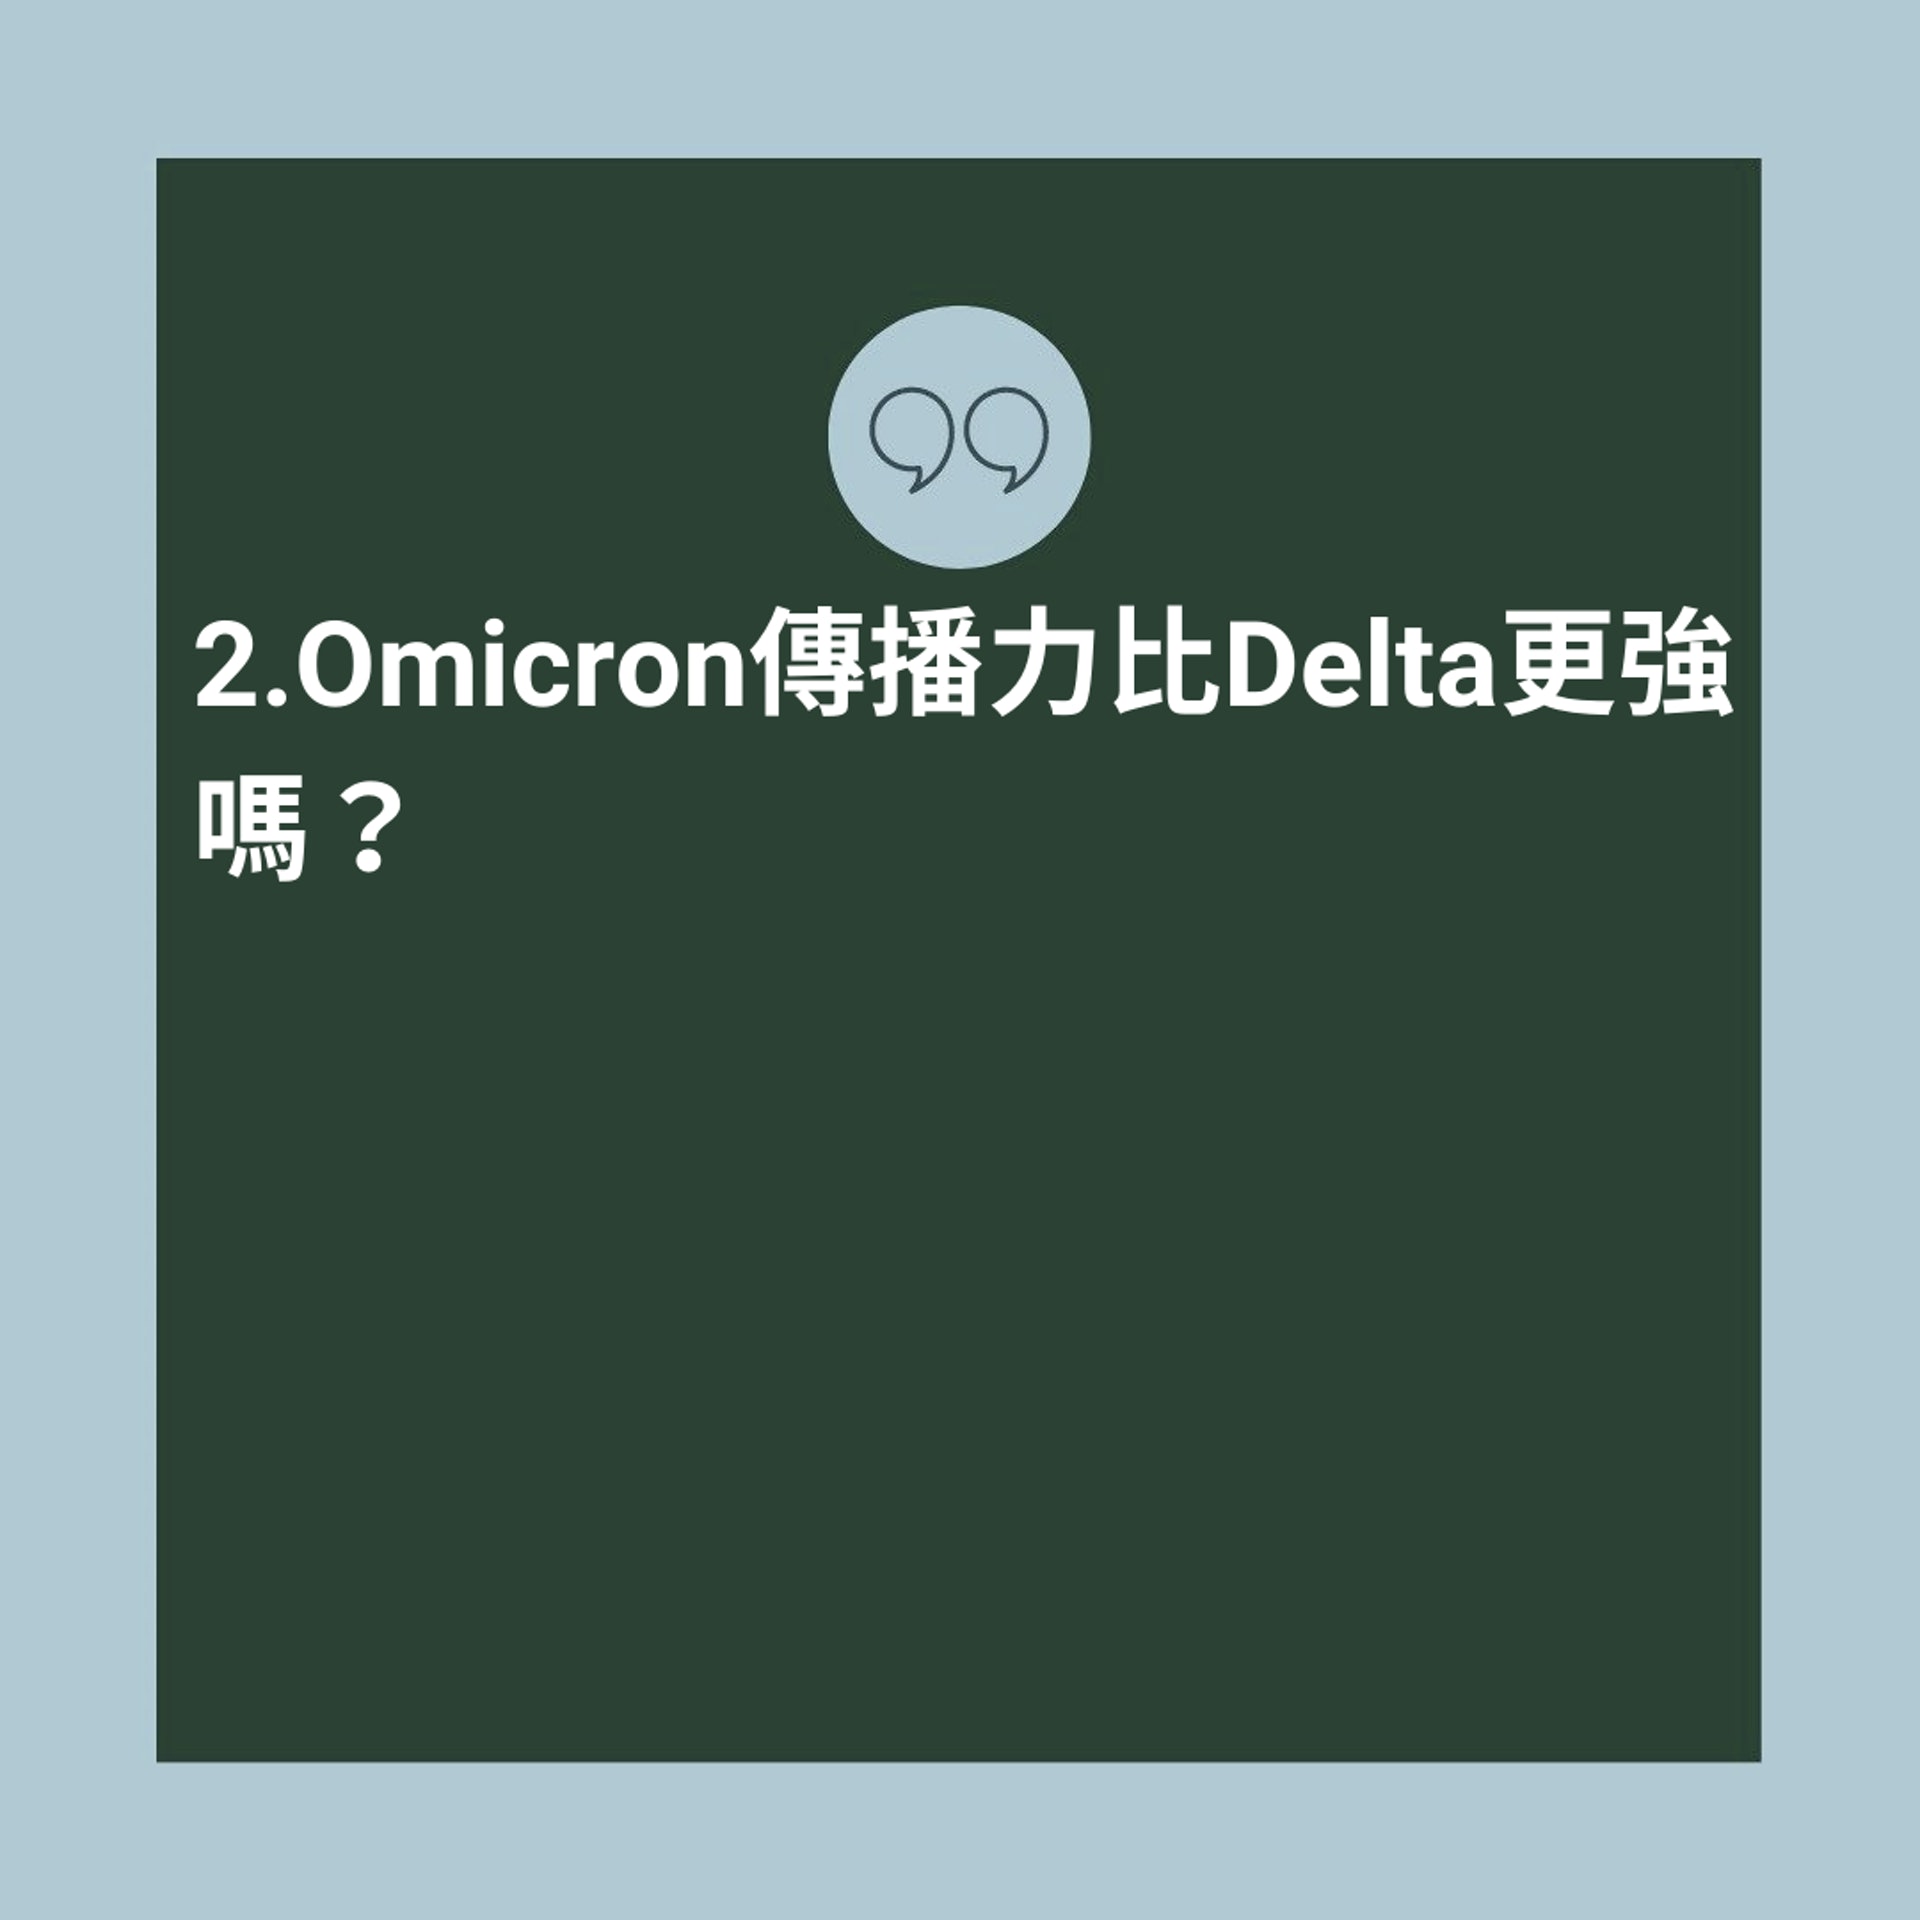 Omicron 6大Q&A懶人包（01製圖）